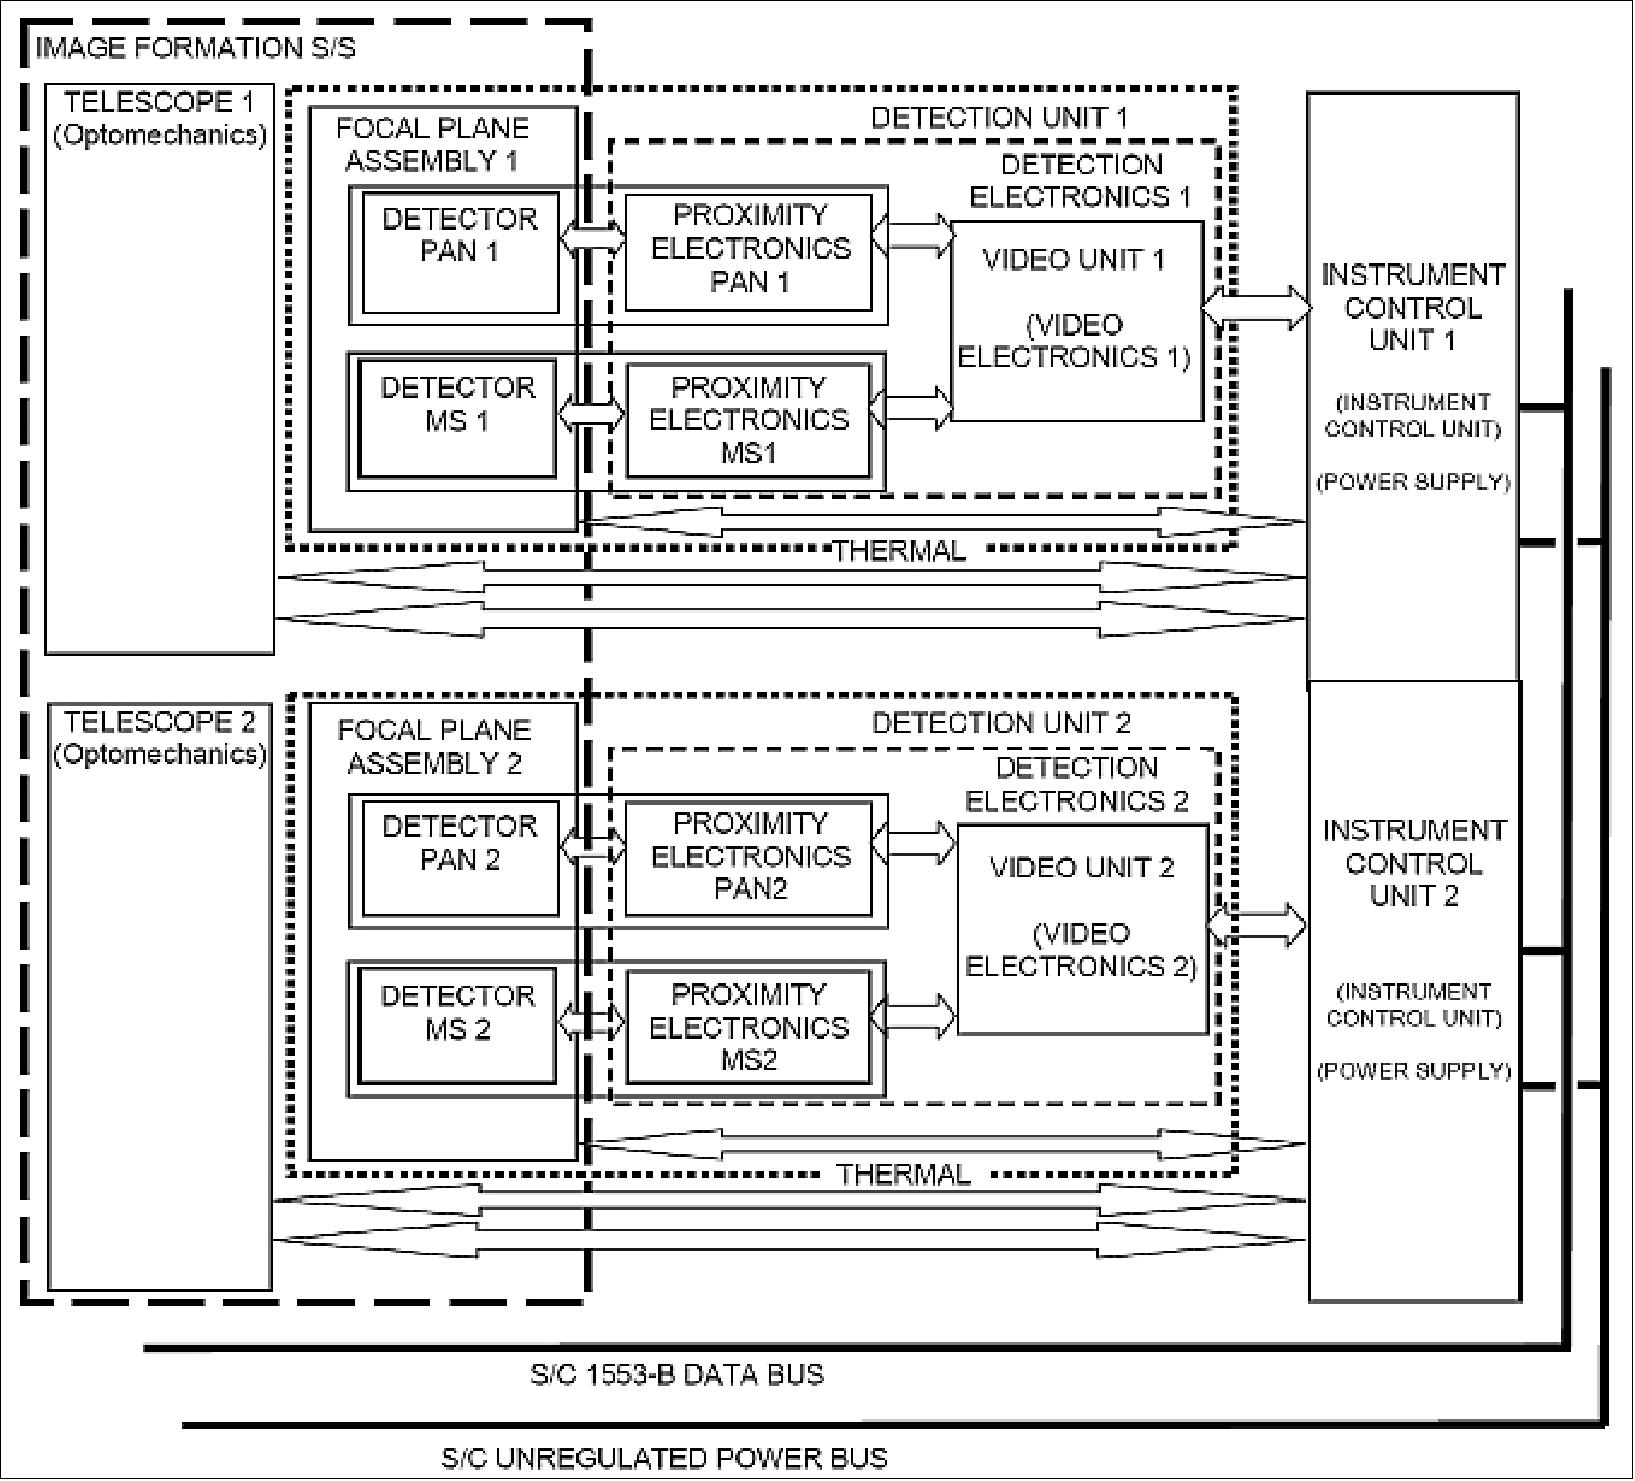 Figure 26: Architecture of the PP instrument (image credit: Sener)